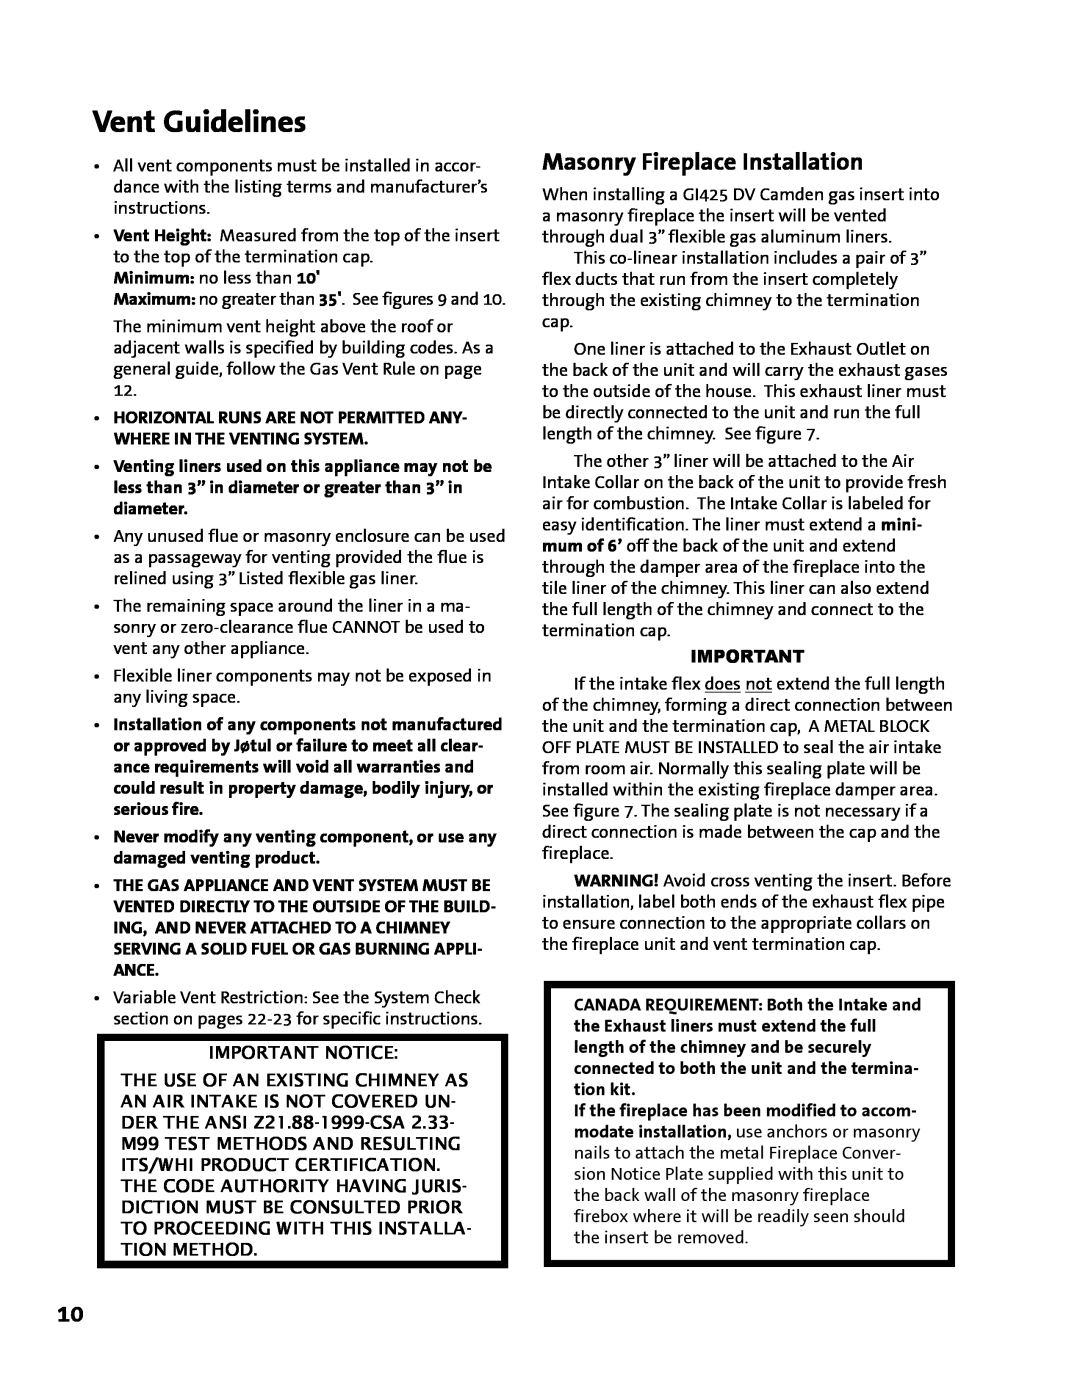 Jotul GI 425 DV manual Vent Guidelines, Masonry Fireplace Installation 